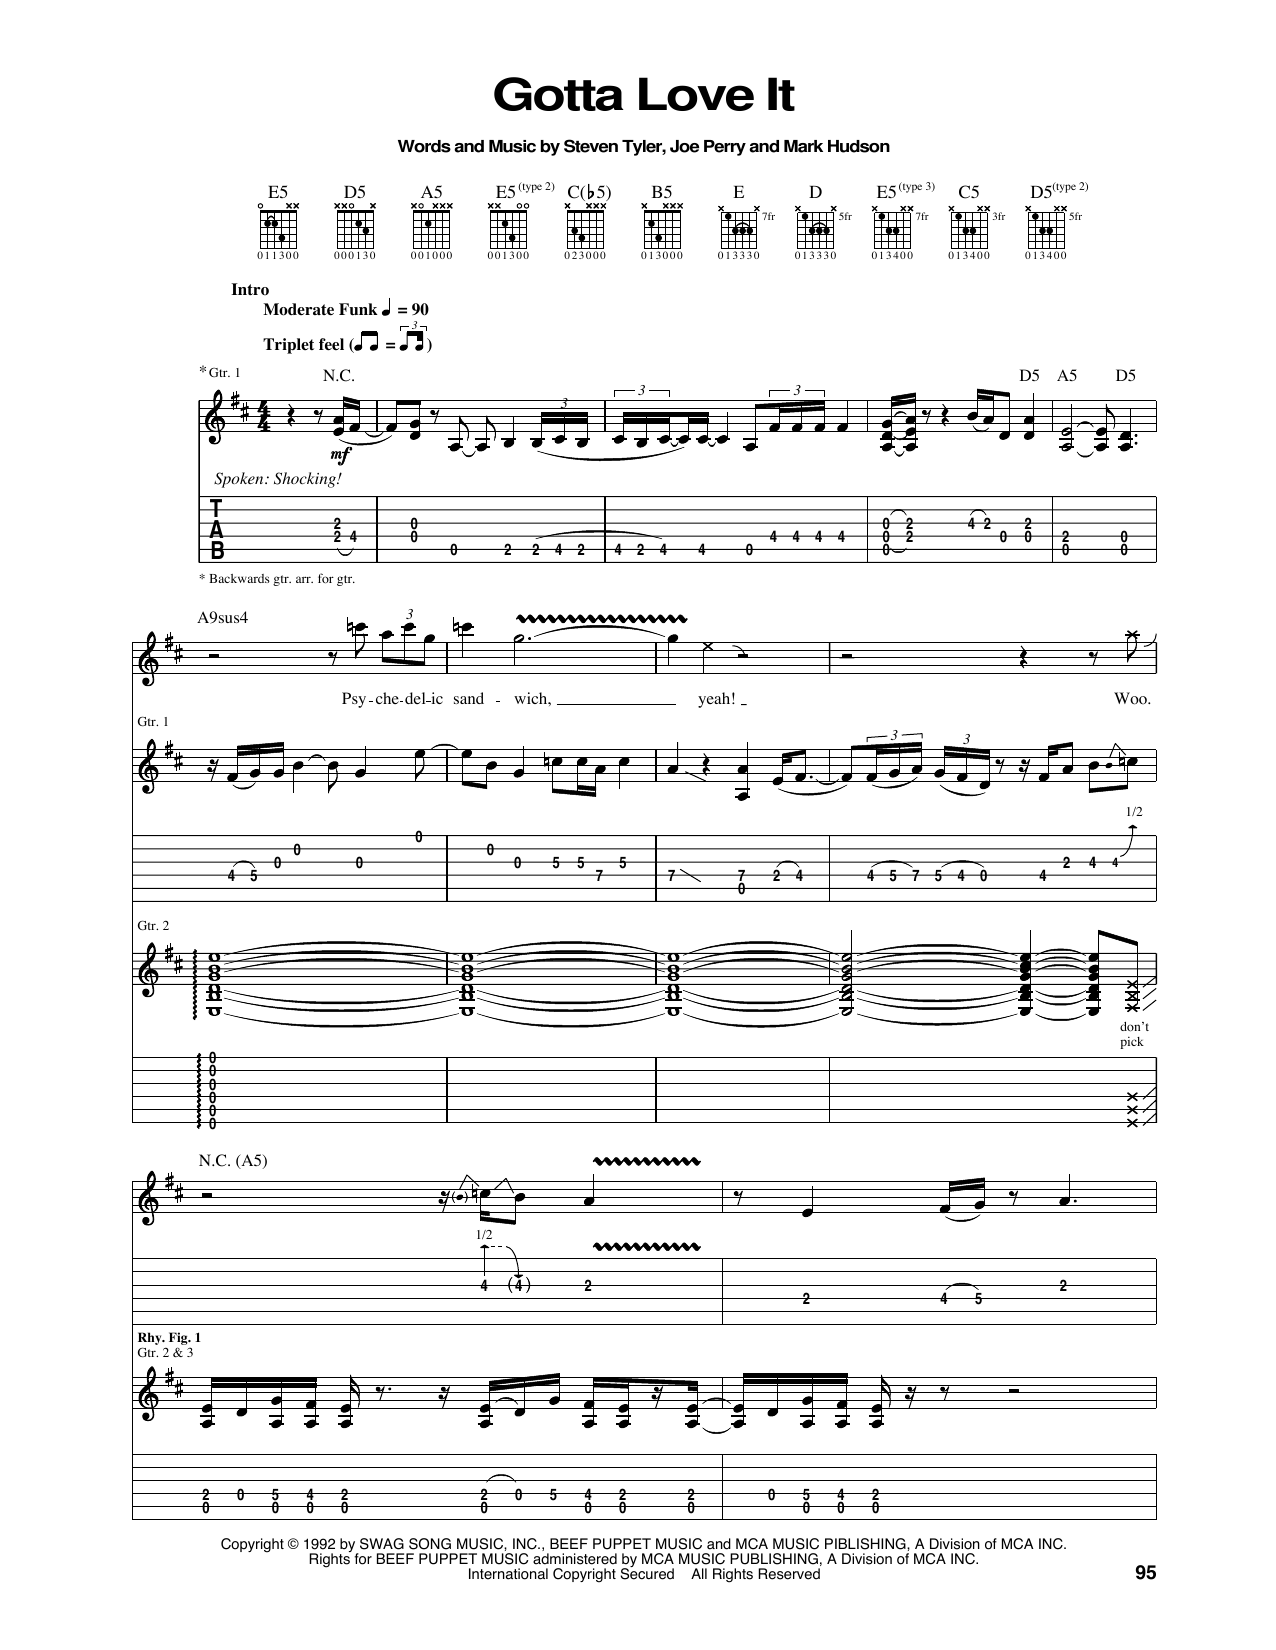 Aerosmith Gotta Love It Sheet Music Notes & Chords for Guitar Tab - Download or Print PDF